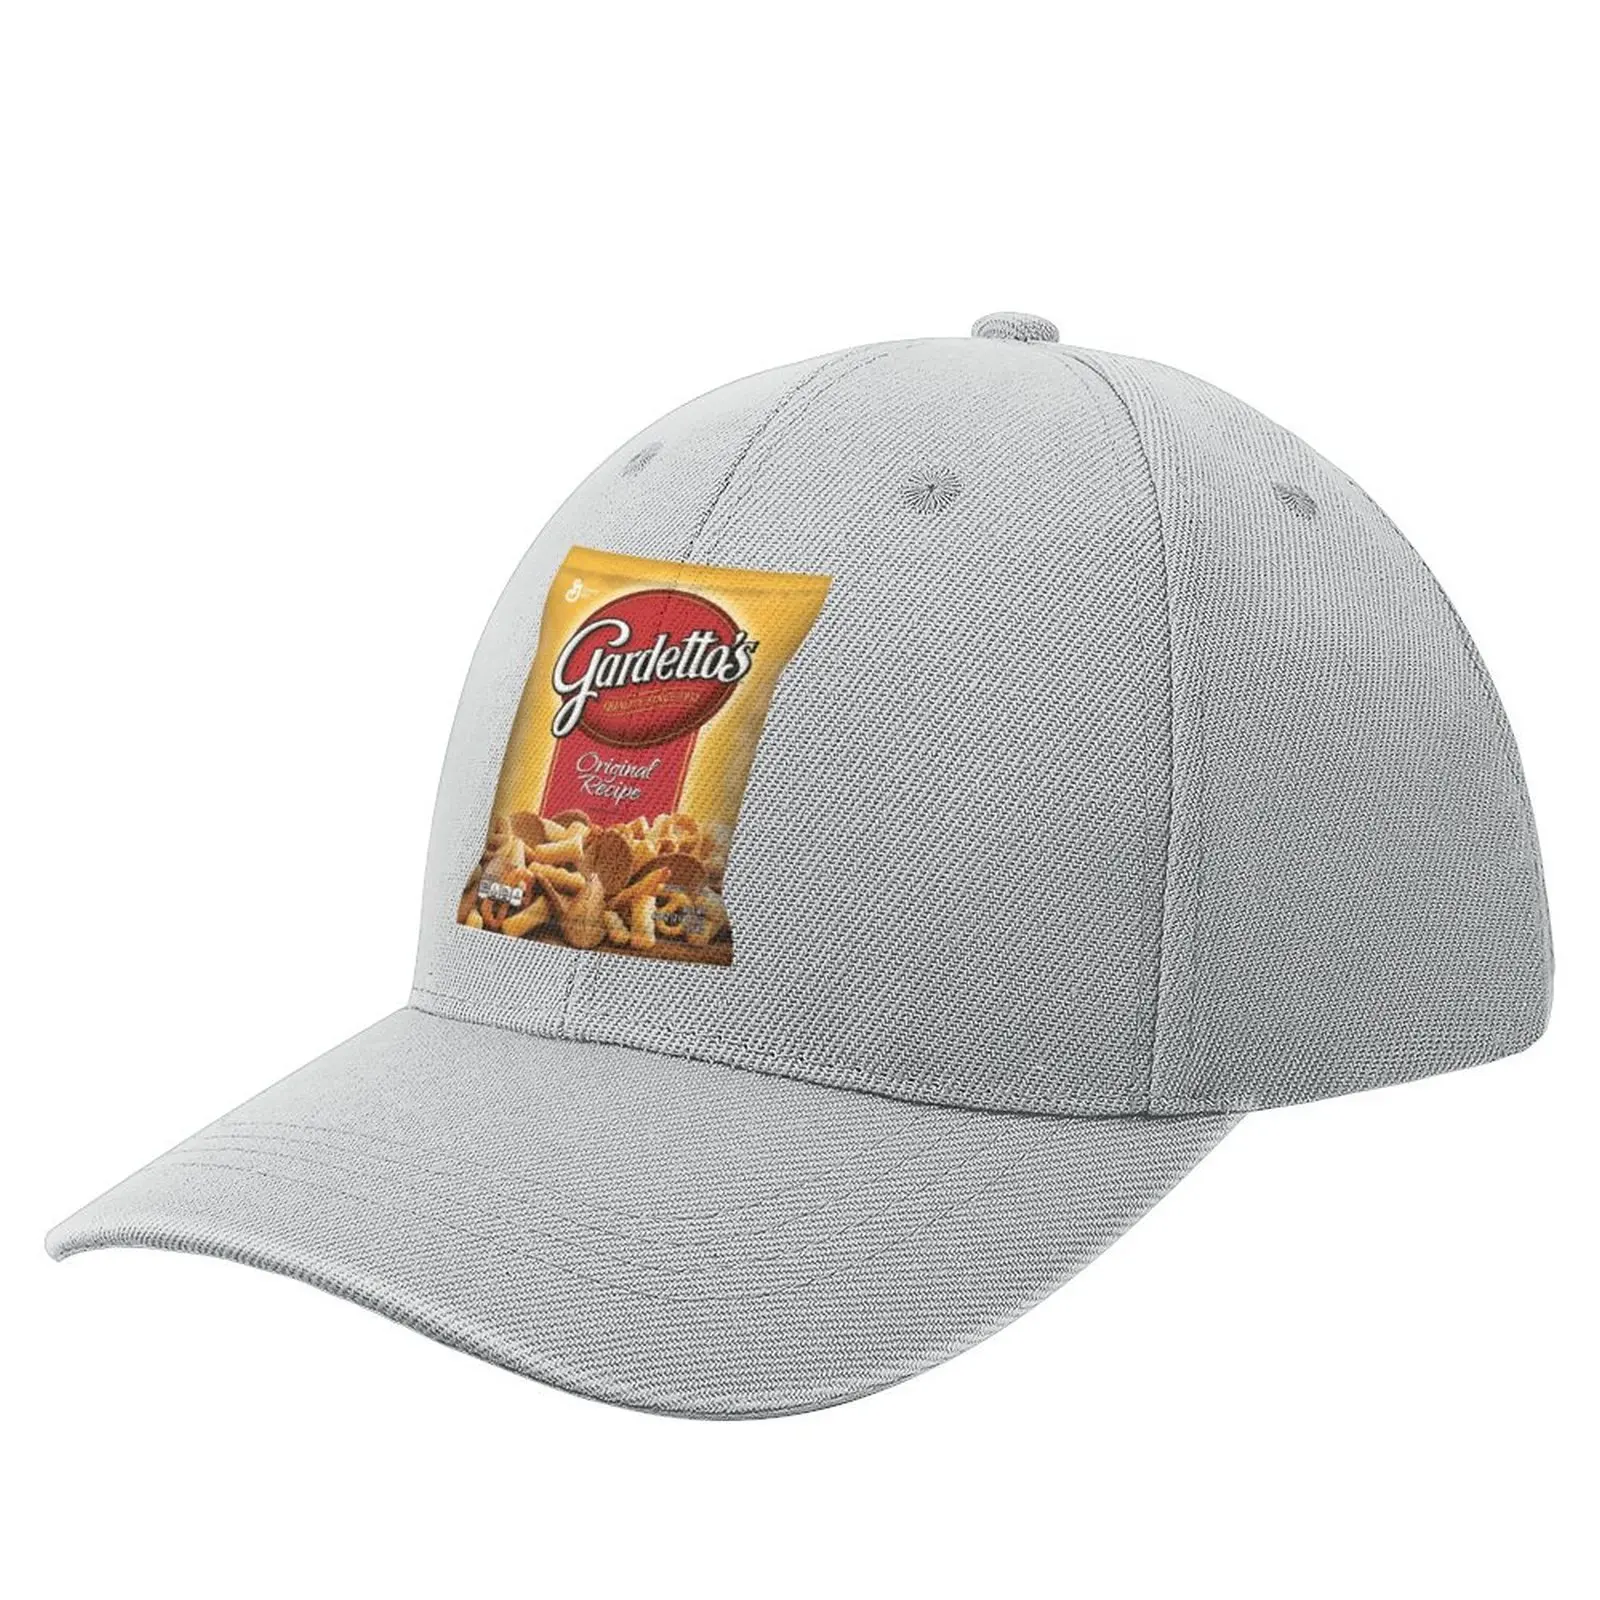 

Gardetto's Baseball Cap Bobble Hat Luxury Cap Caps For Women Men'S